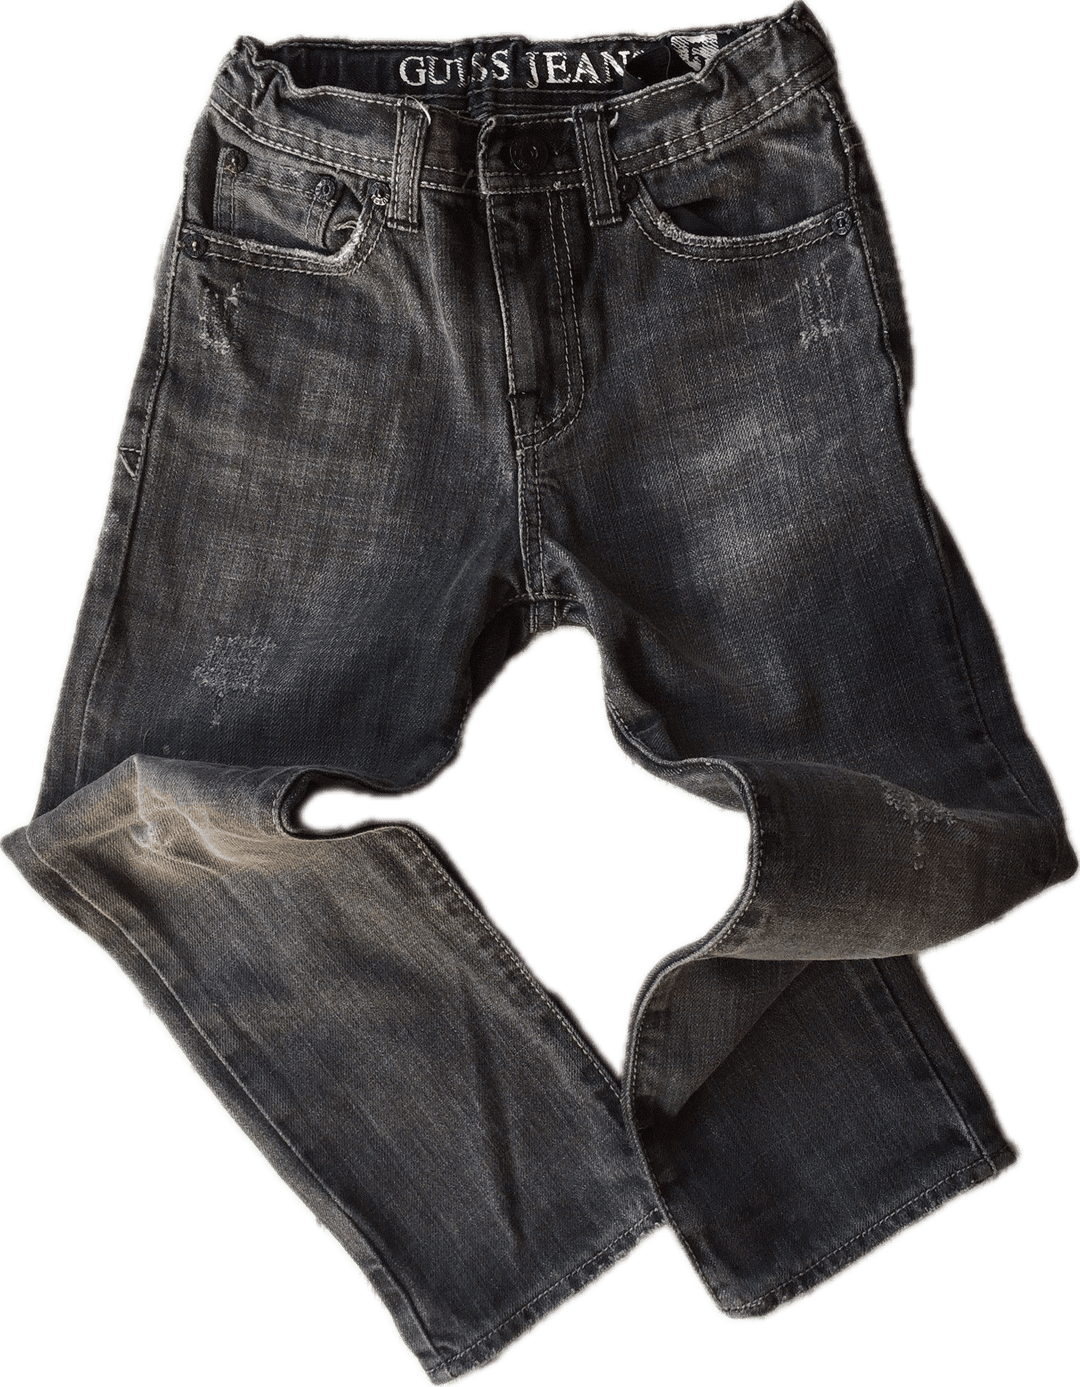 Guess "Brit Rocker" Jeans - Size 5 - Jean Pool